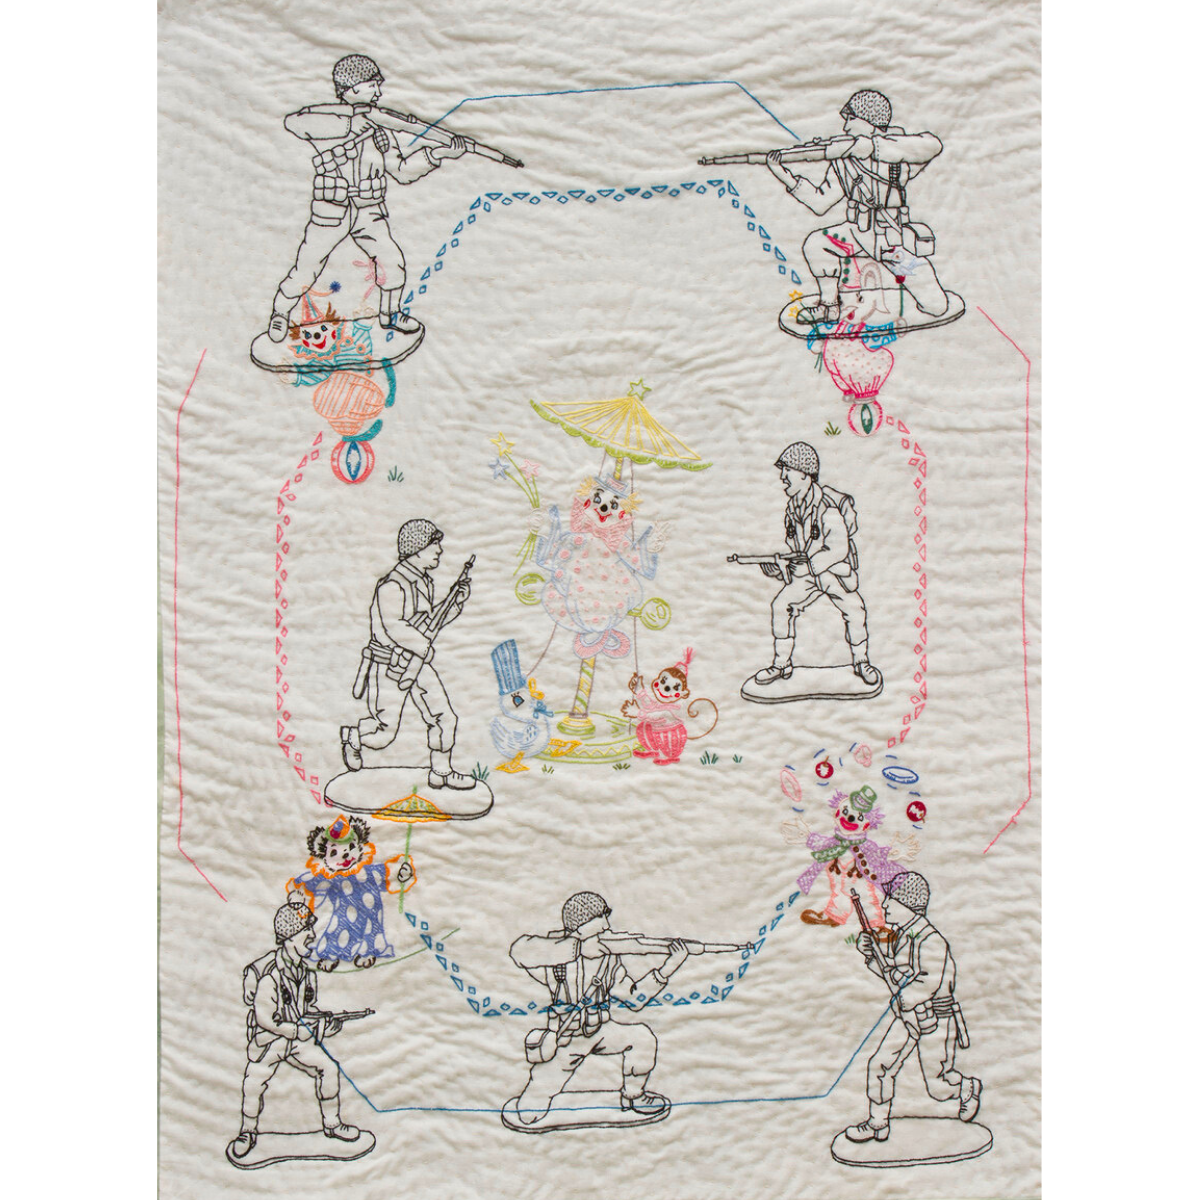 Laurel Izard Clowns and Soldiers Textile 2022 4s" x 32" $2,400